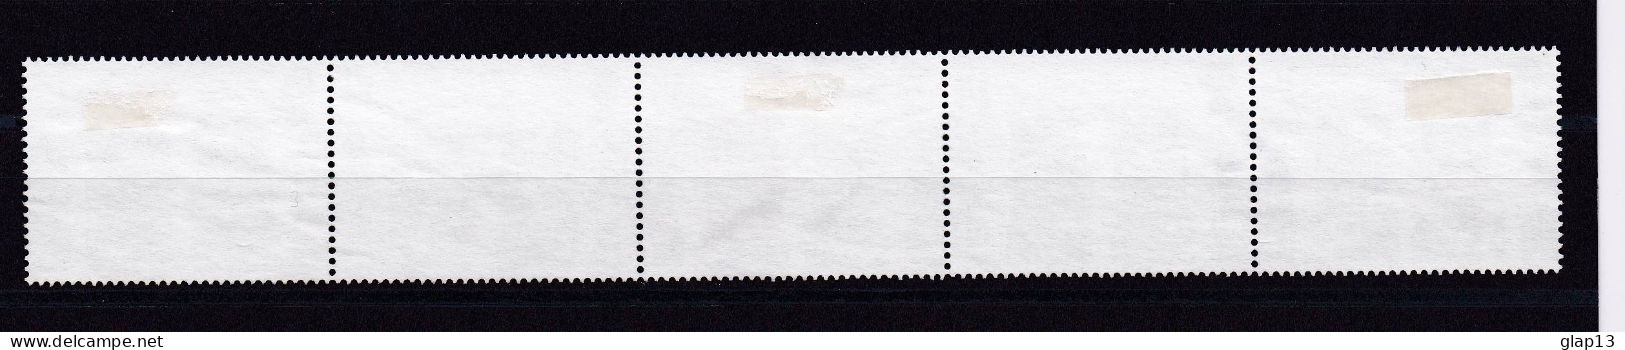 GRANDE-BRETAGNE 2001 TIMBRE N°2253/57 OBLITERE AUTOBUS A IMPERIALE - Used Stamps